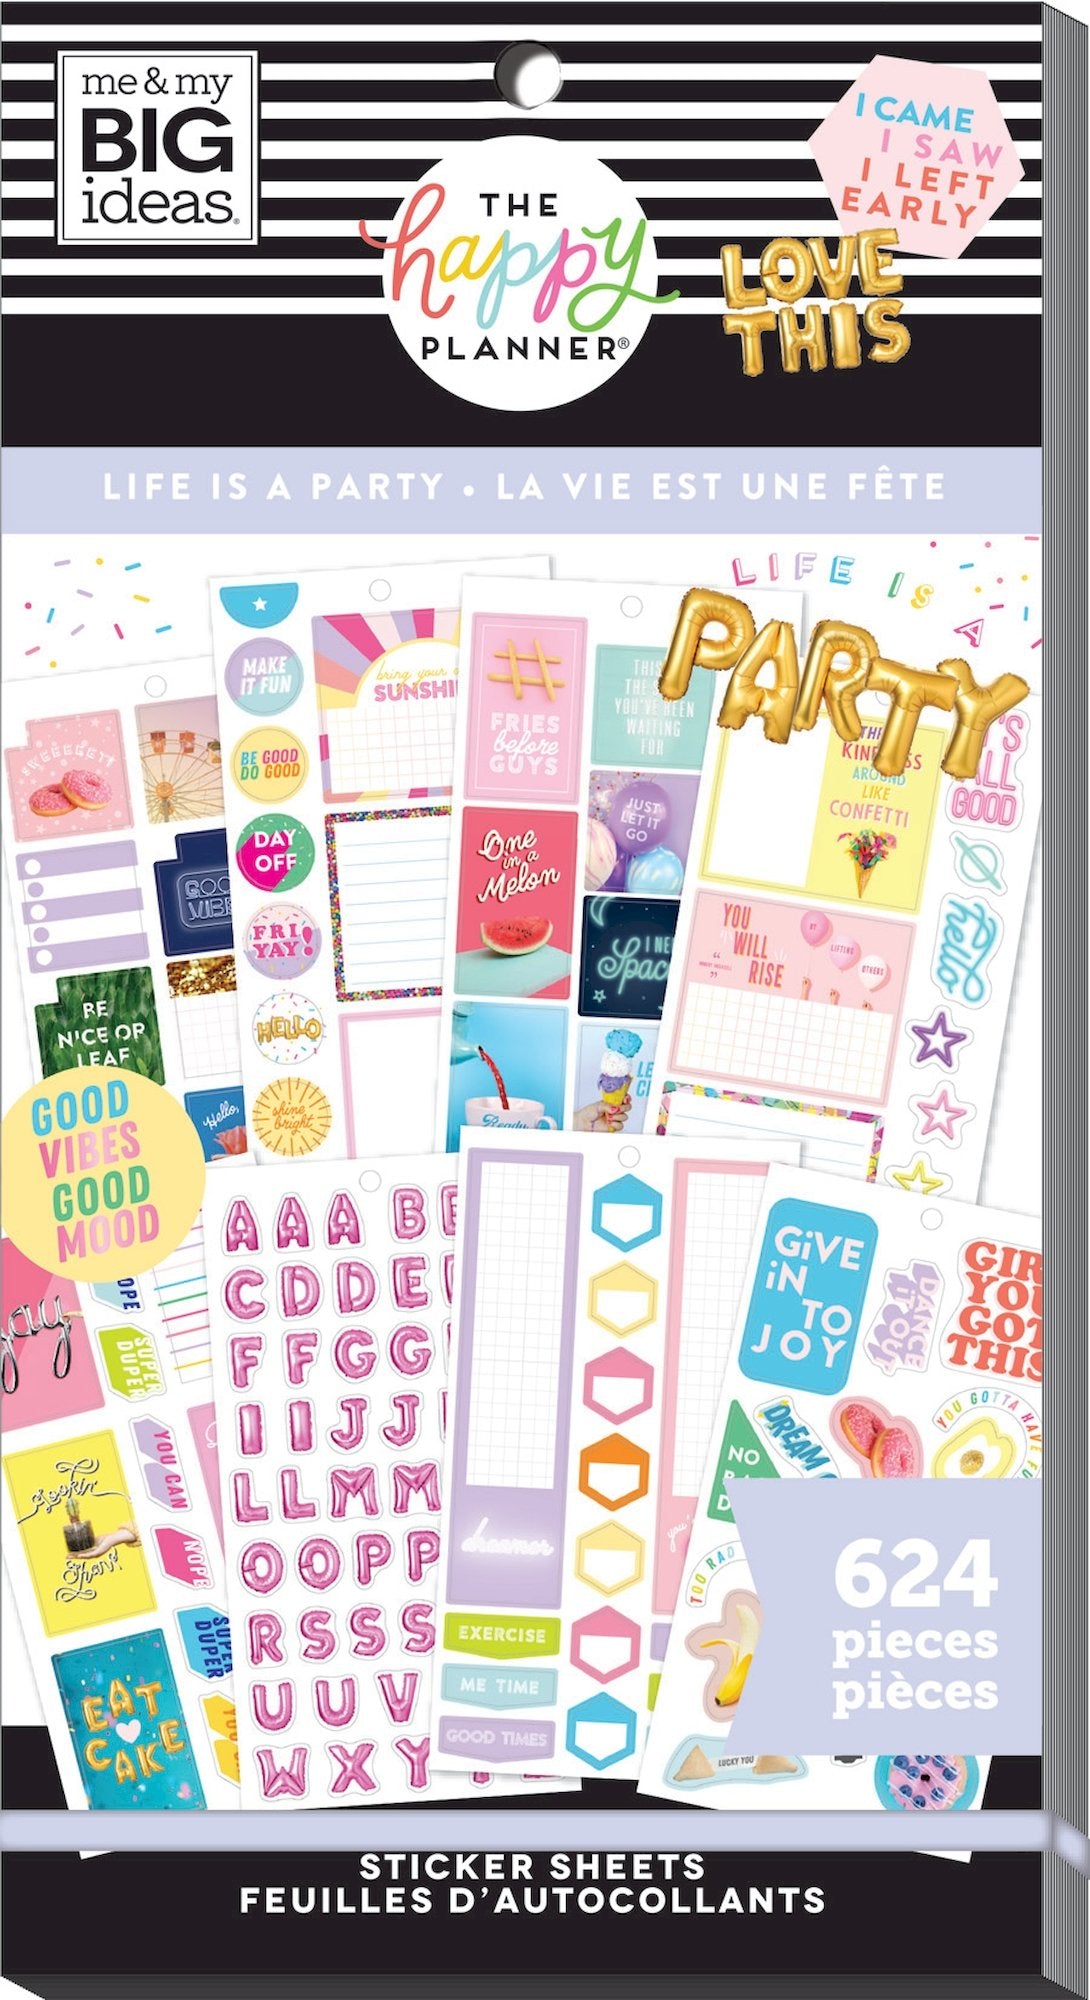 HAPPY BIRTHDAY Stickers Planner Stickers Happy Birthday Labels Tracker  Sticker Notebook Decals Colorful Design